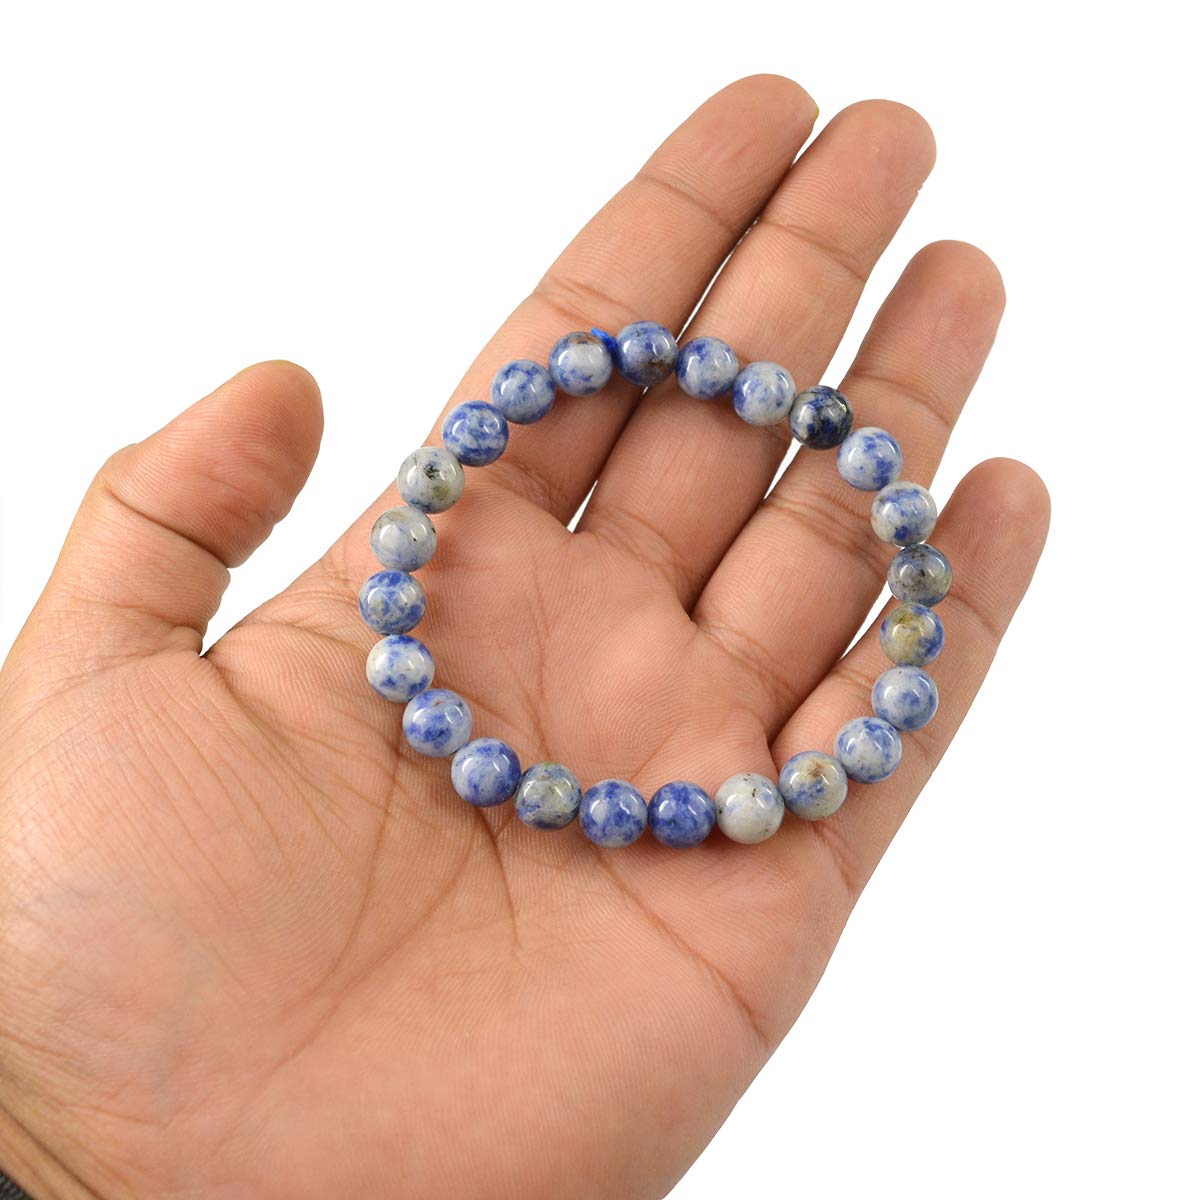 Healing Crystals - Wholesale Sodalite Bracelet